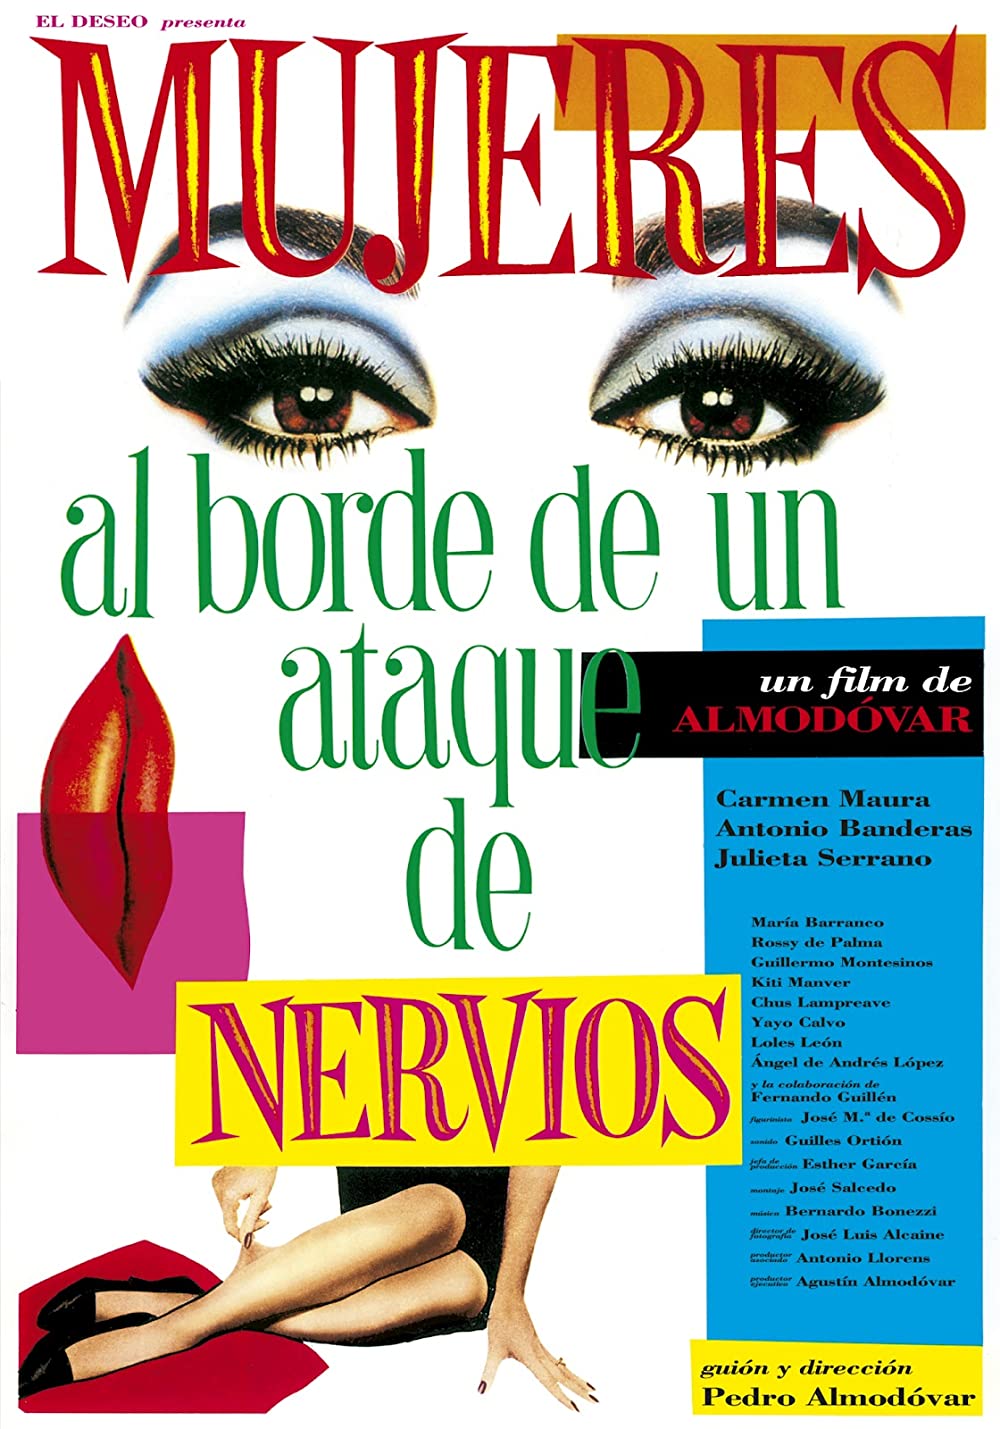 Film poster for Pedro Almodóvar’s WOMEN ON THE VERGE OF A NERVOUS BREAKDOWN (1988)